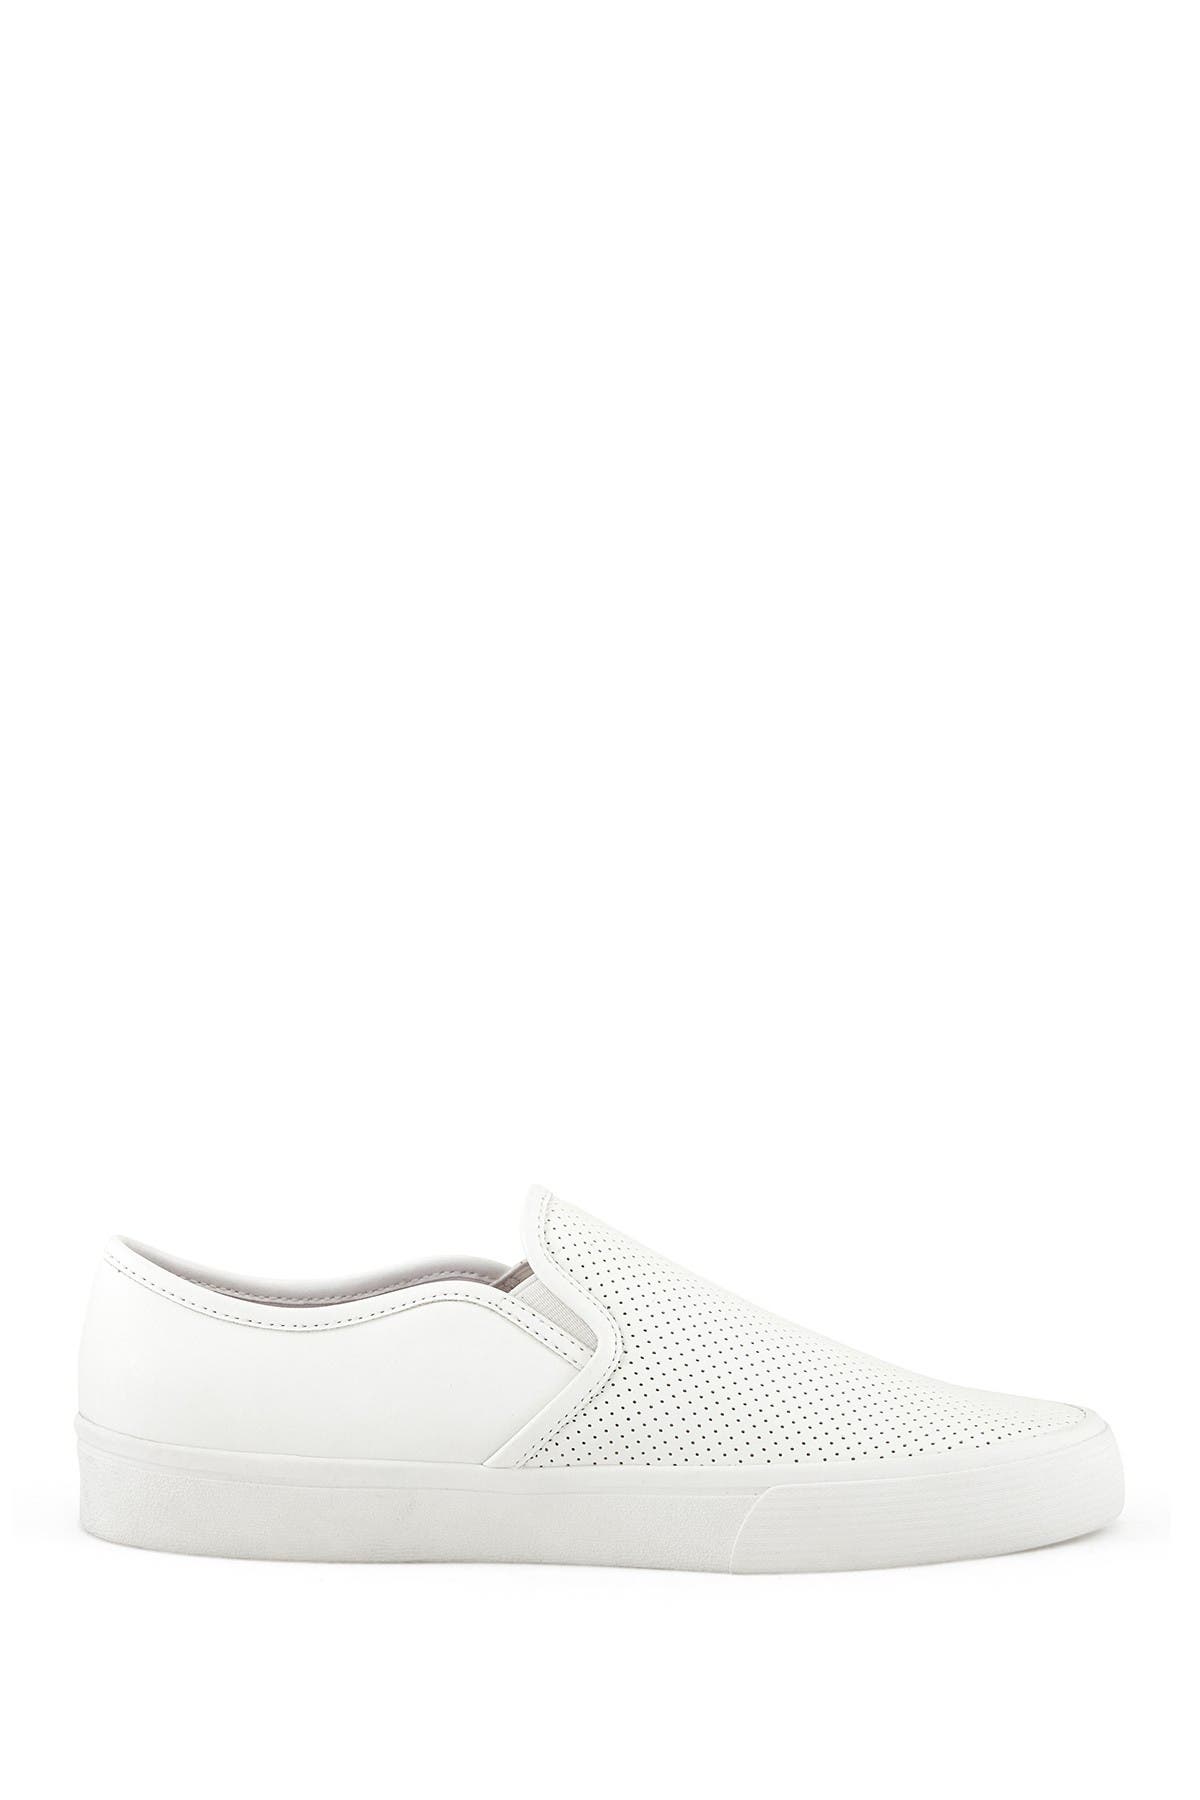 Nest Footwear Perforated Slip-on Sneaker In White